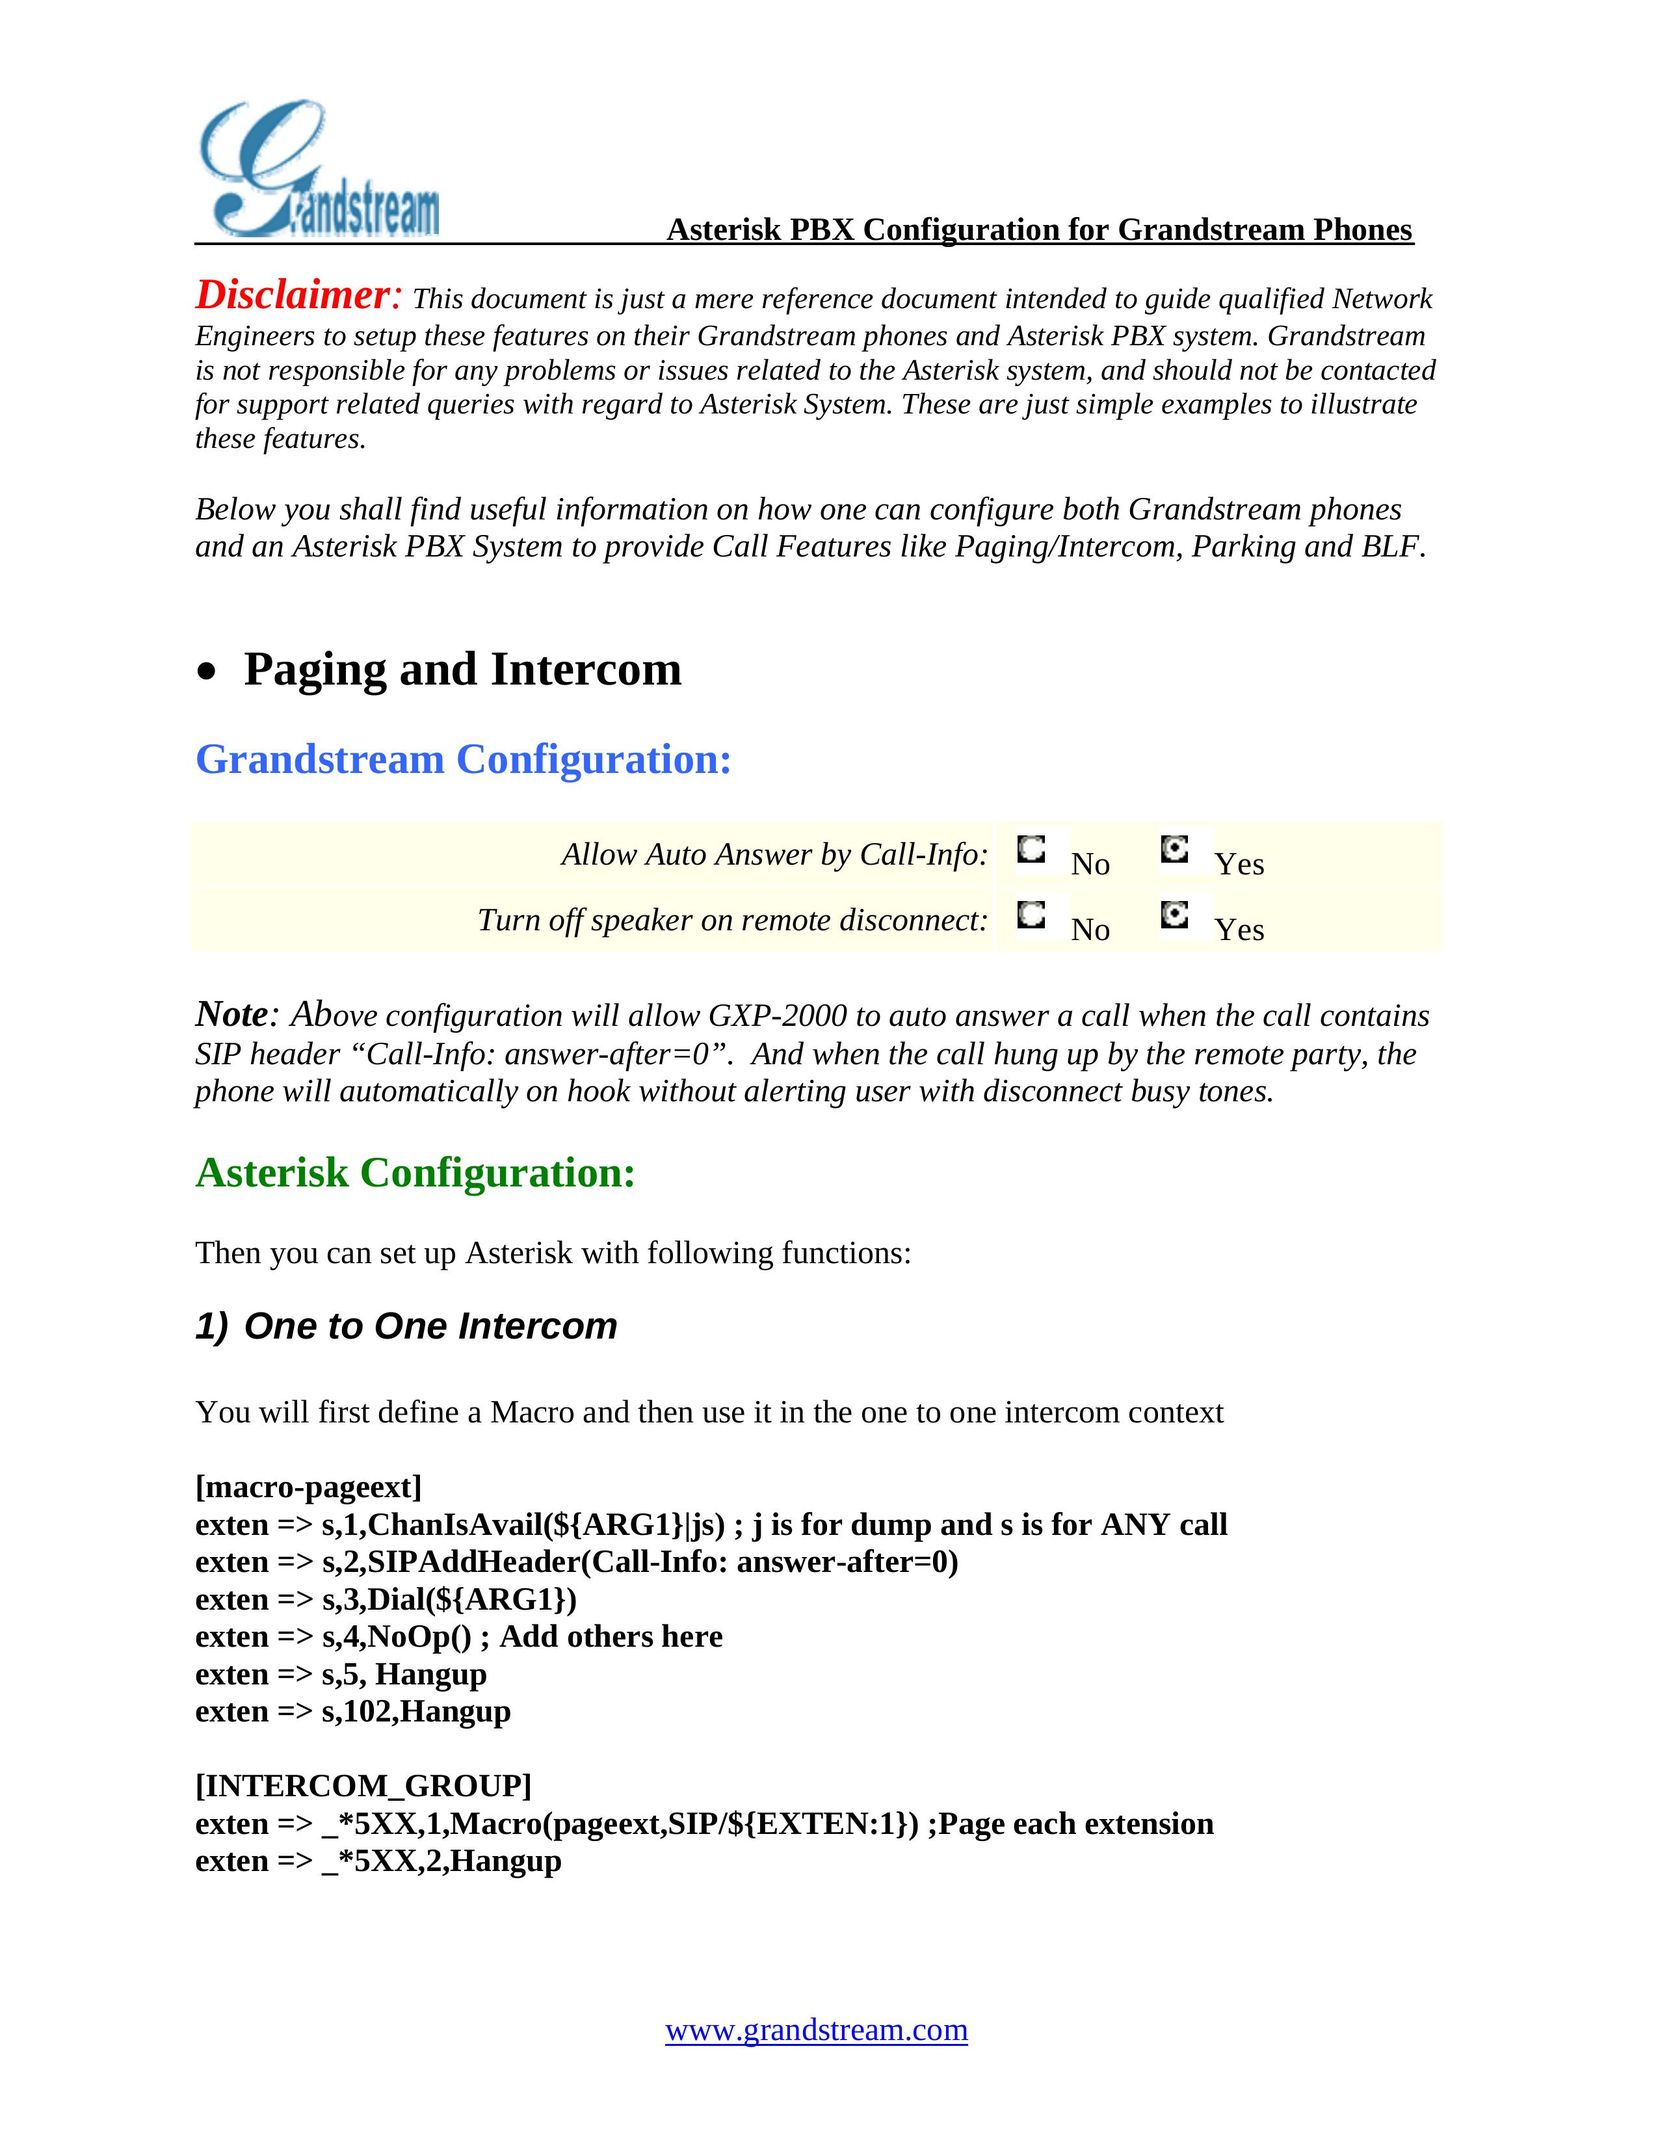 Grandstream Networks GXP-2000 Intercom System User Manual